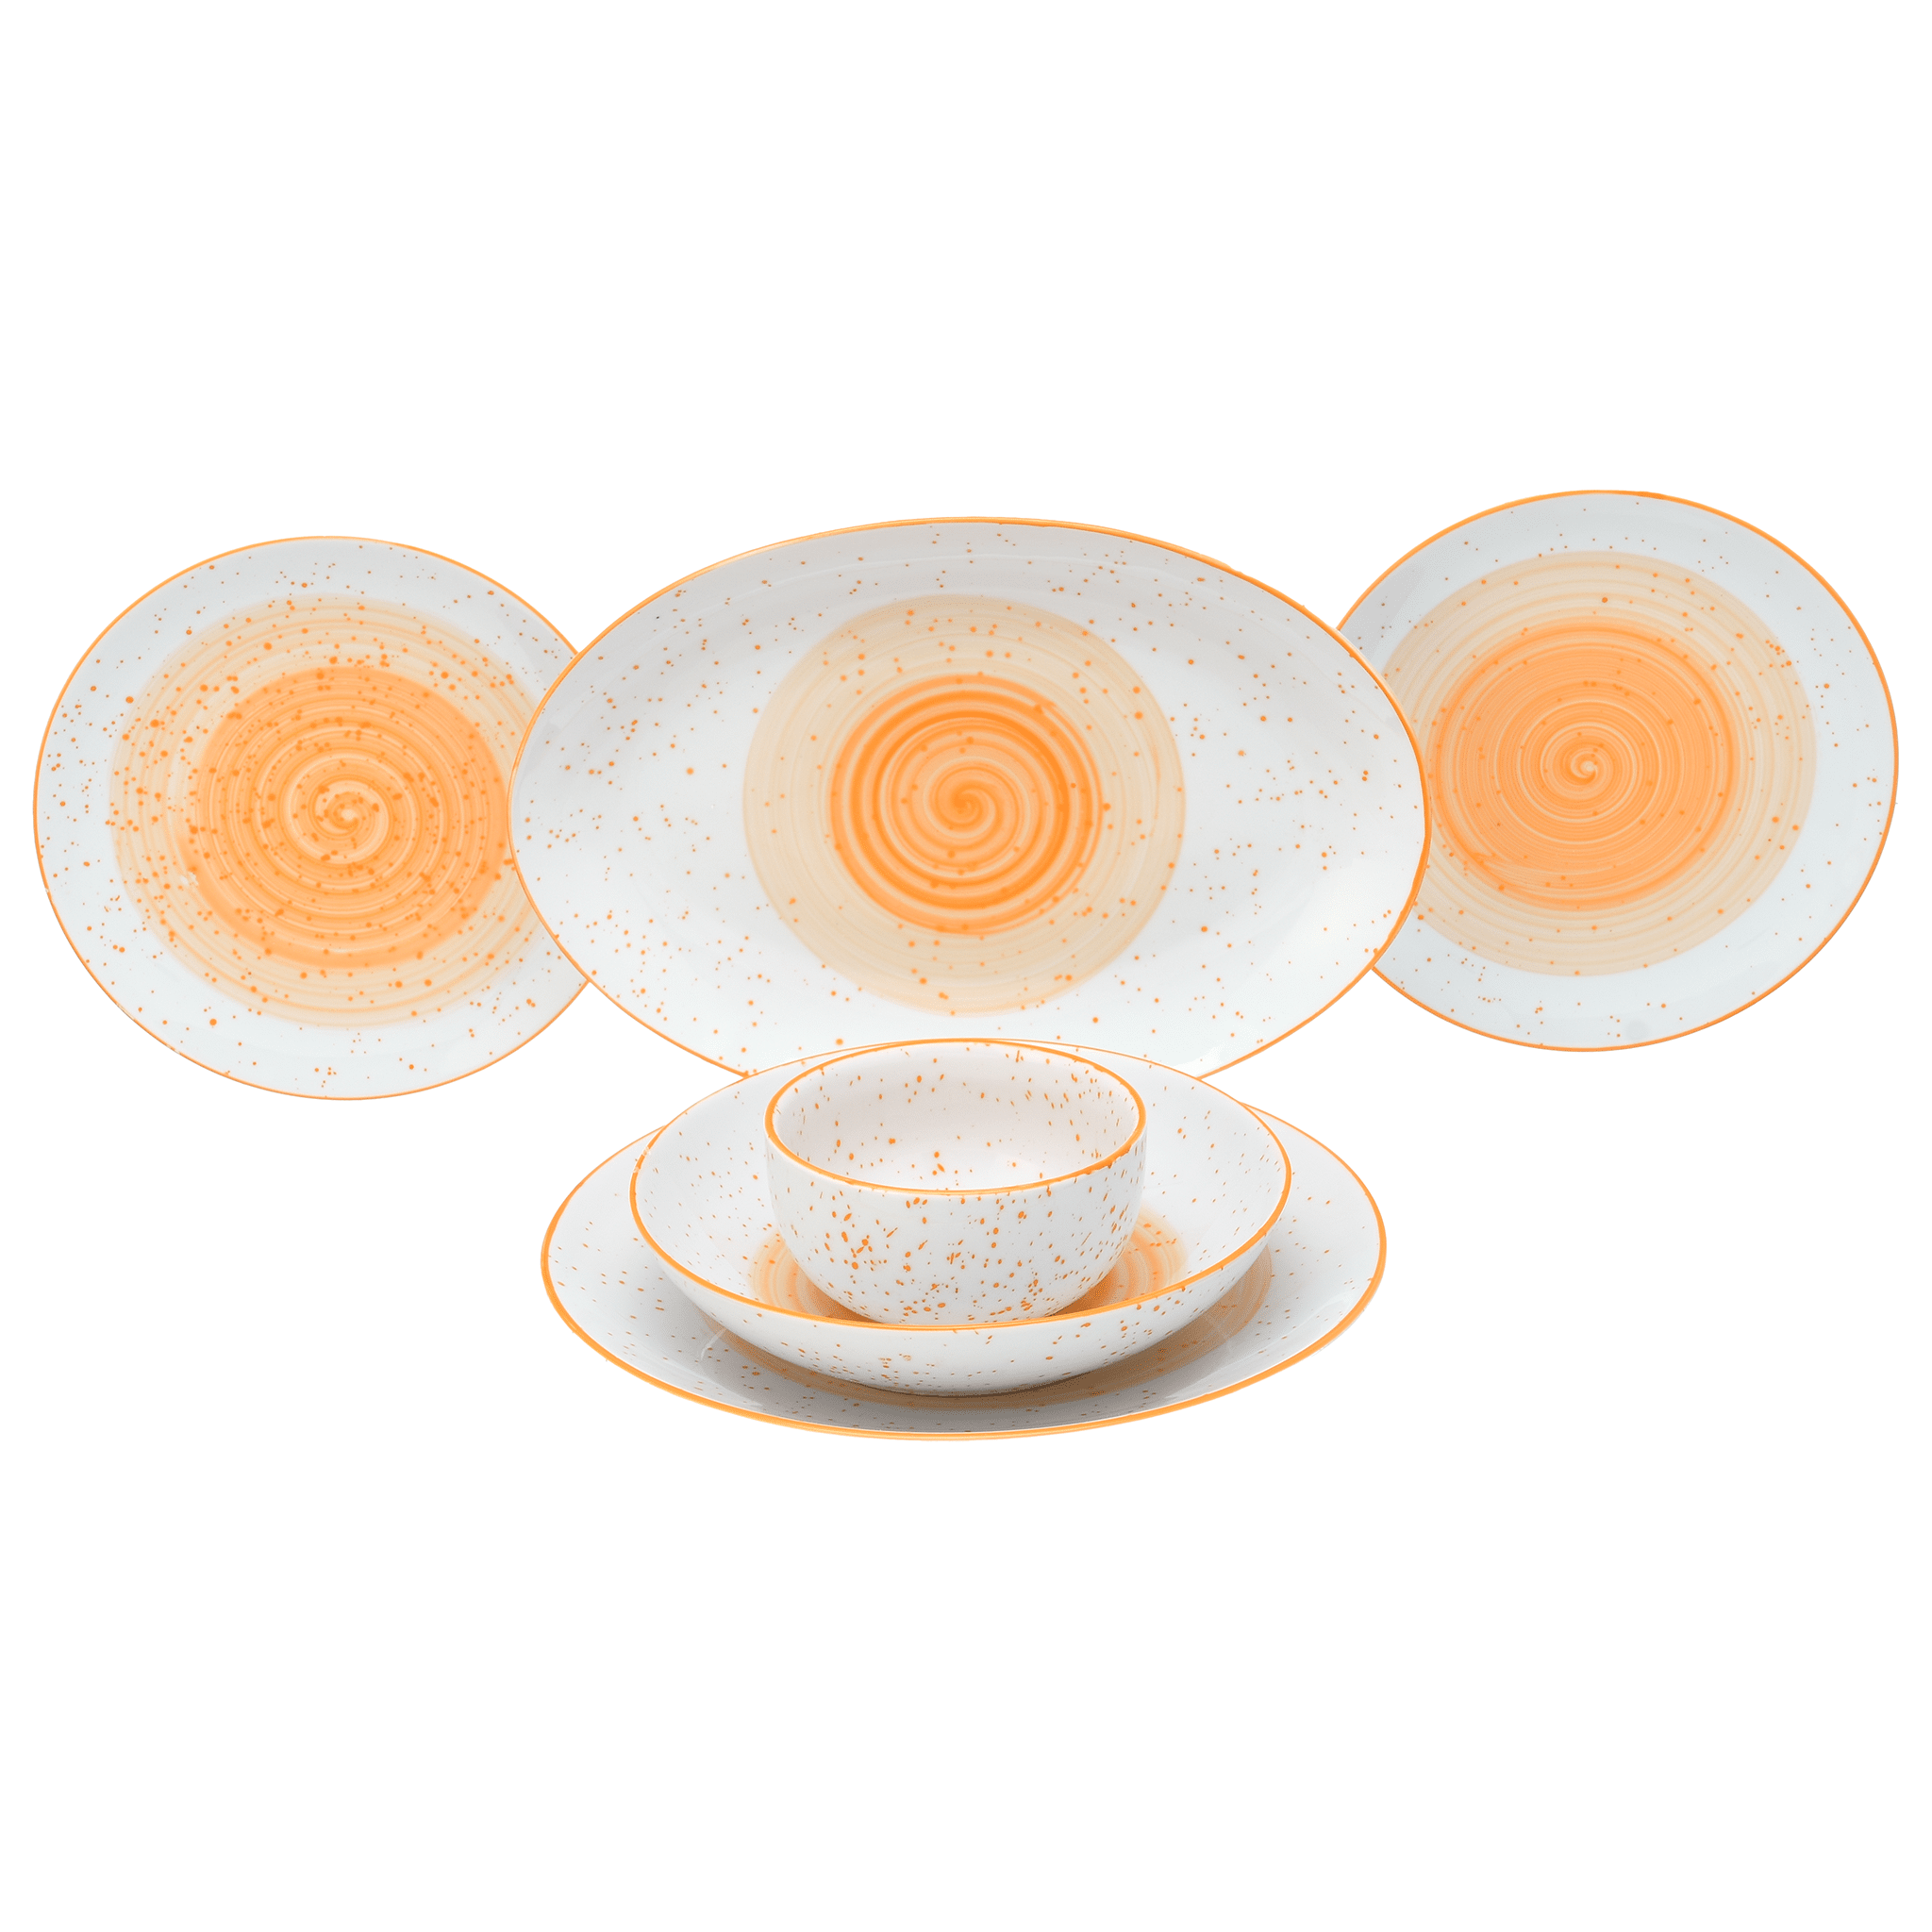 Senzo - Sway Daily Use Dinner Set 25 Pieces - Orange - Porcelain